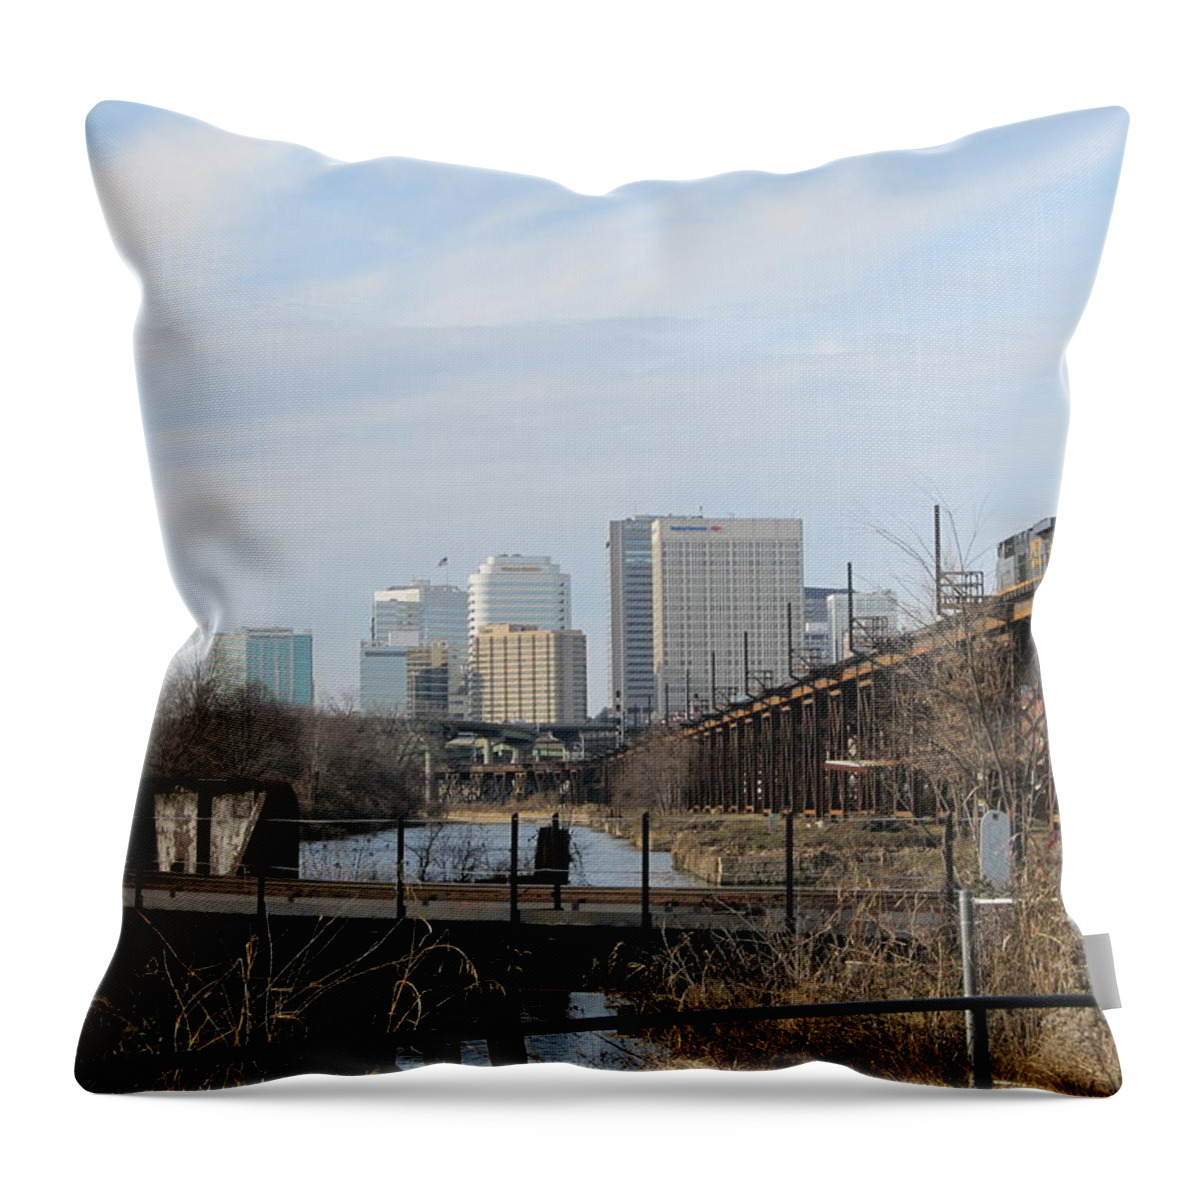  Throw Pillow featuring the photograph Richmond Virginia Skyline by Digital Art Cafe